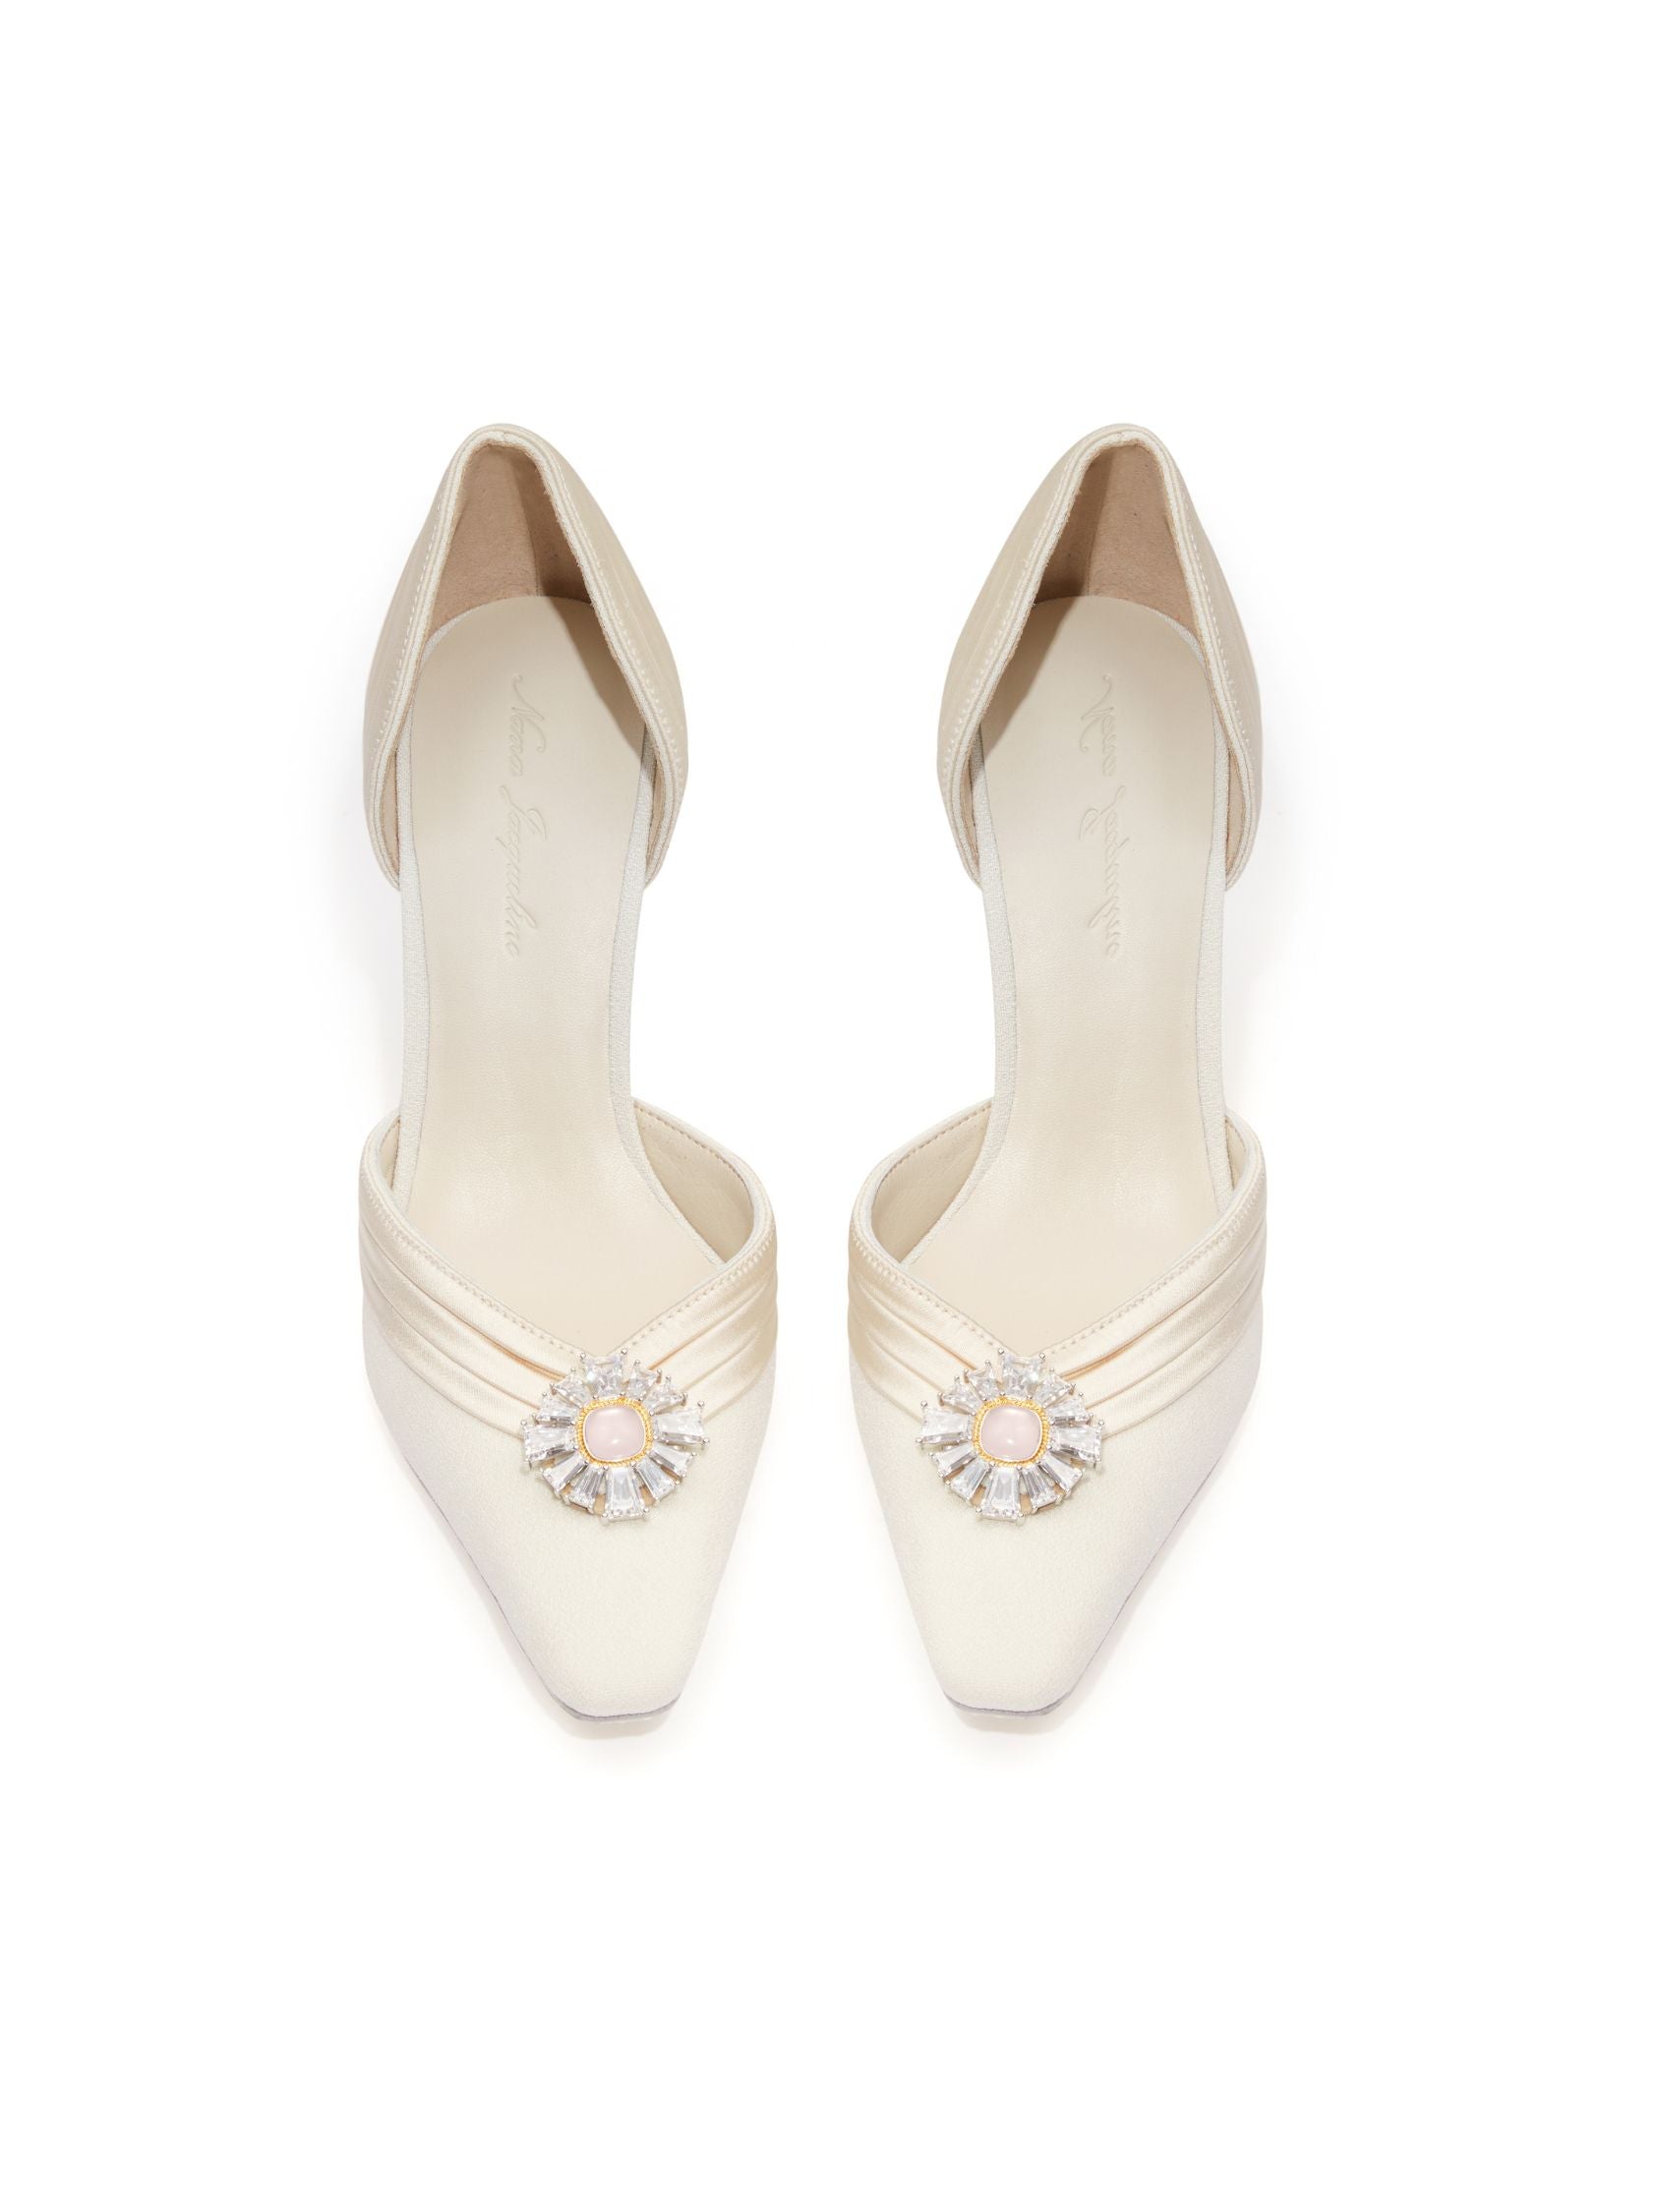 Diana Diamond Heels (White)